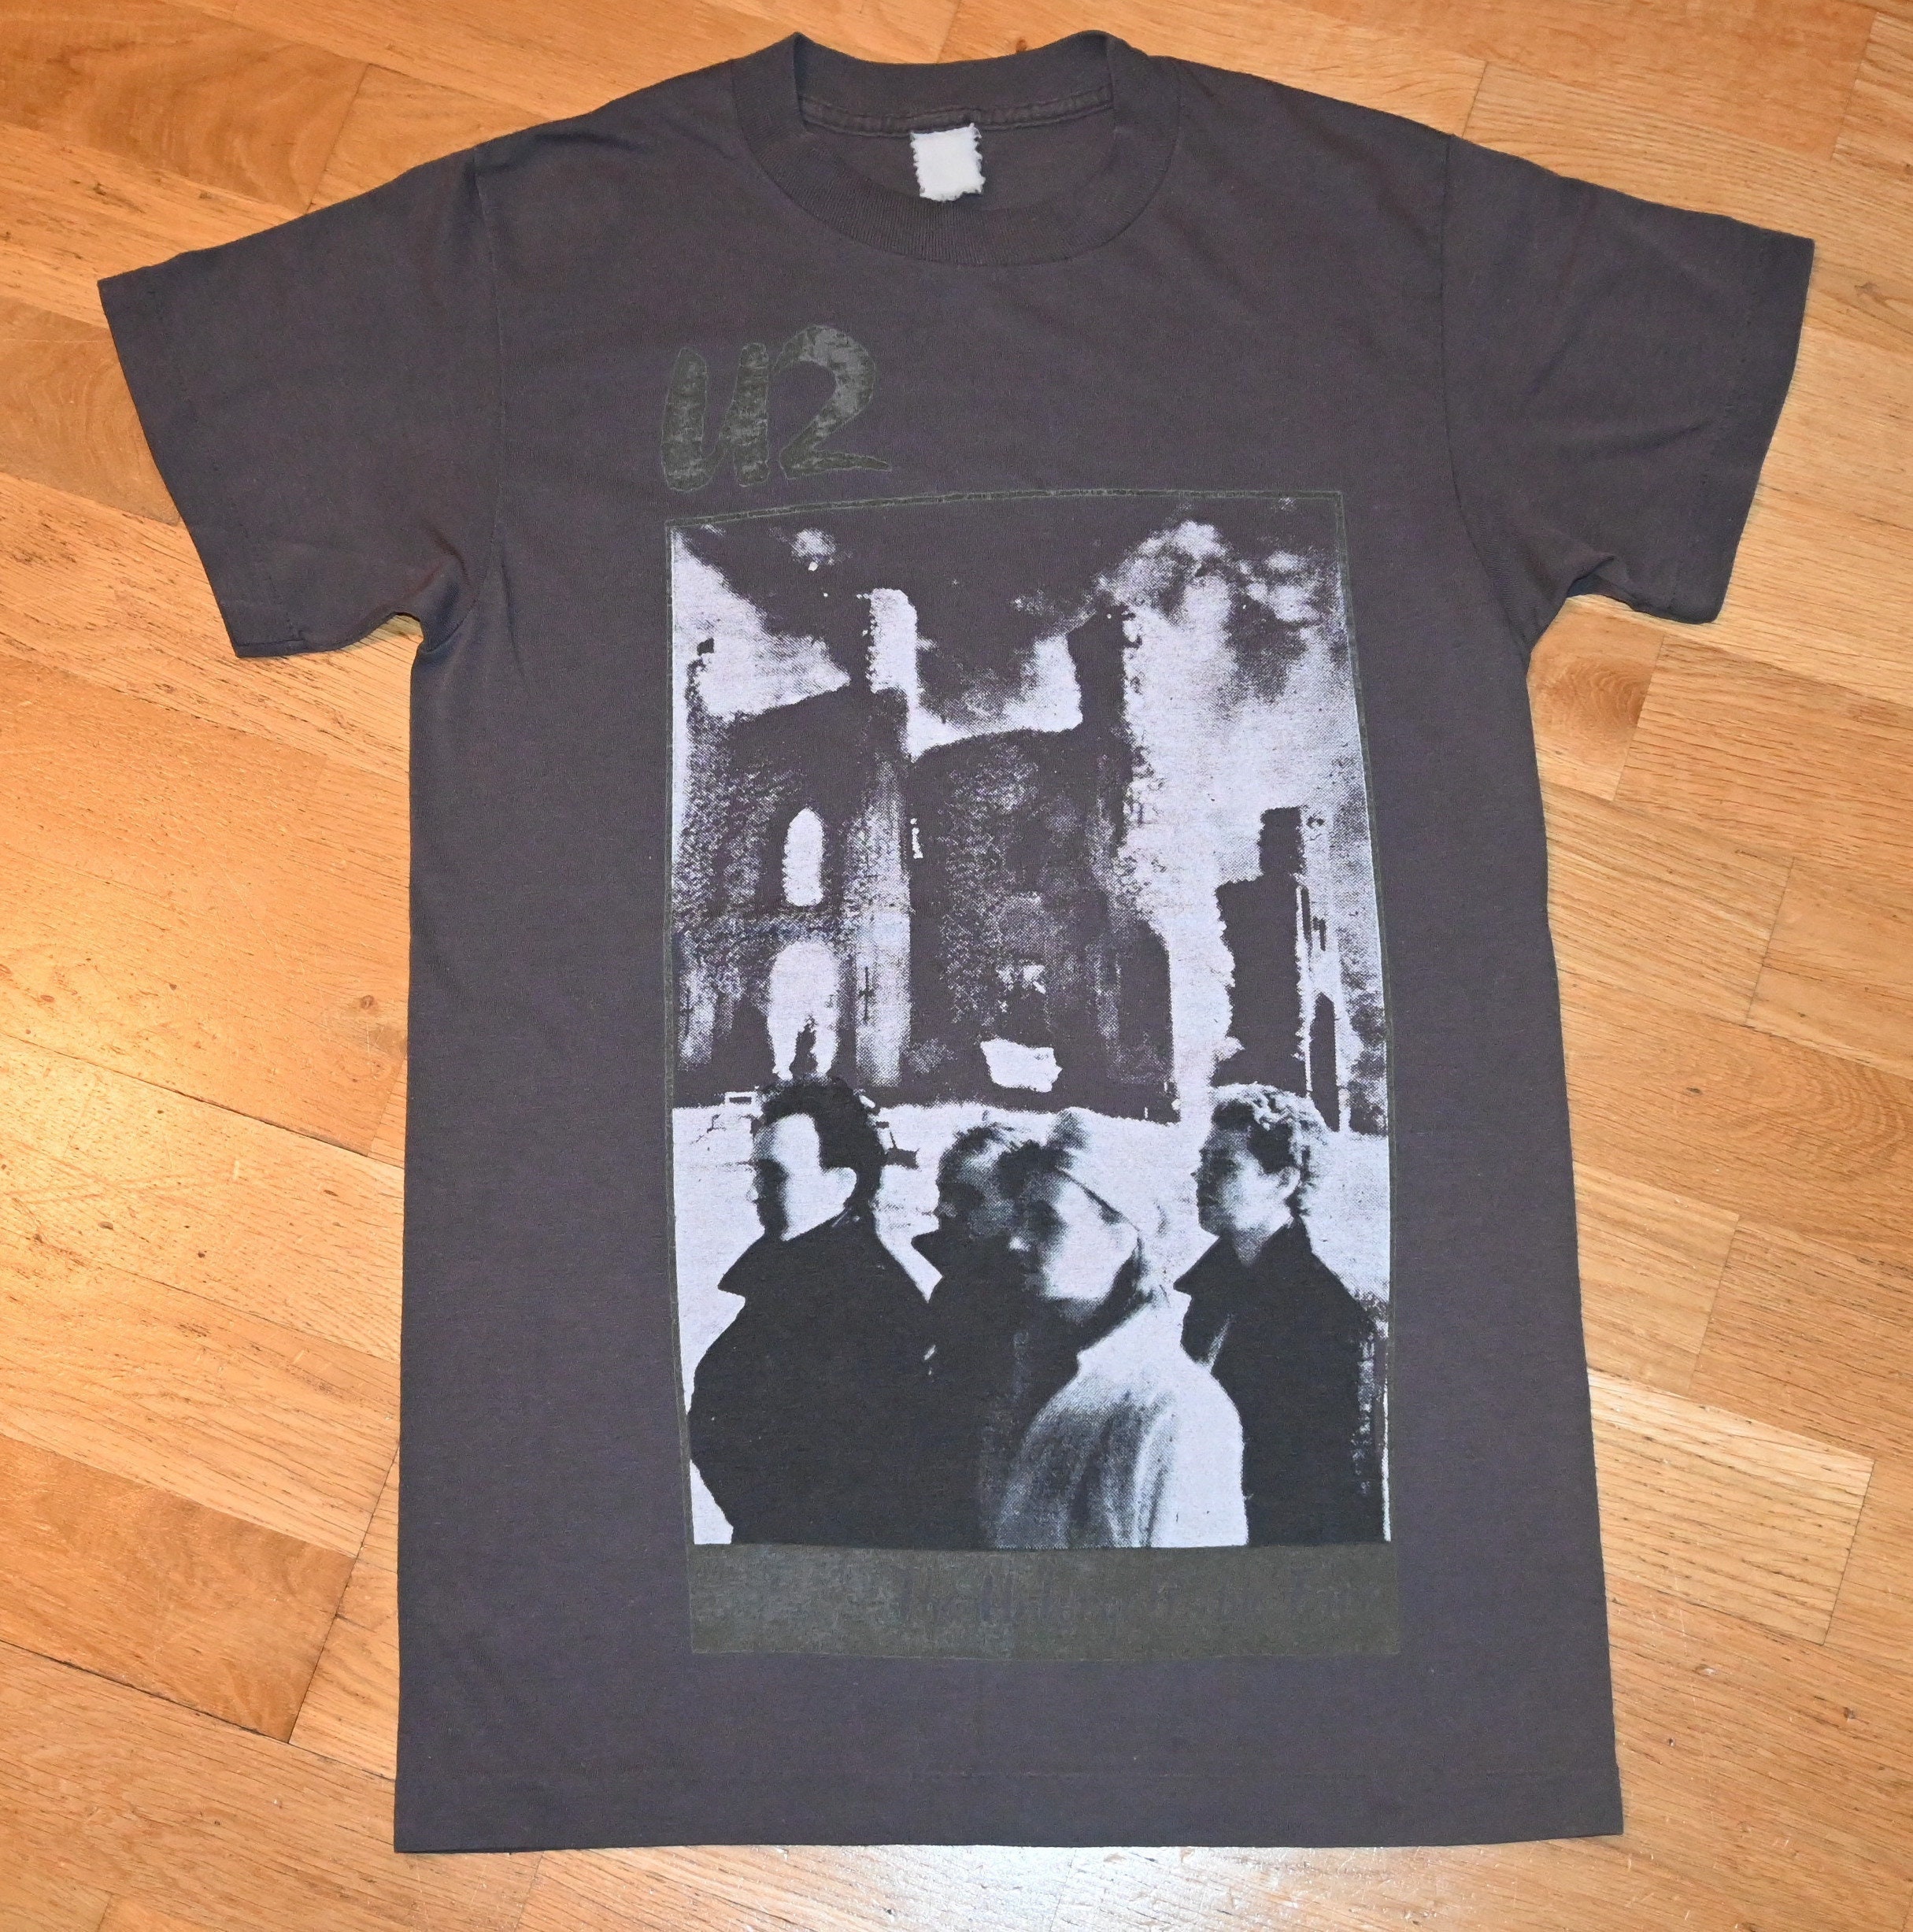 Kleding Herenkleding Overhemden & T-shirts T-shirts T-shirts met print Vintage U2 niet ons tour band shirt 